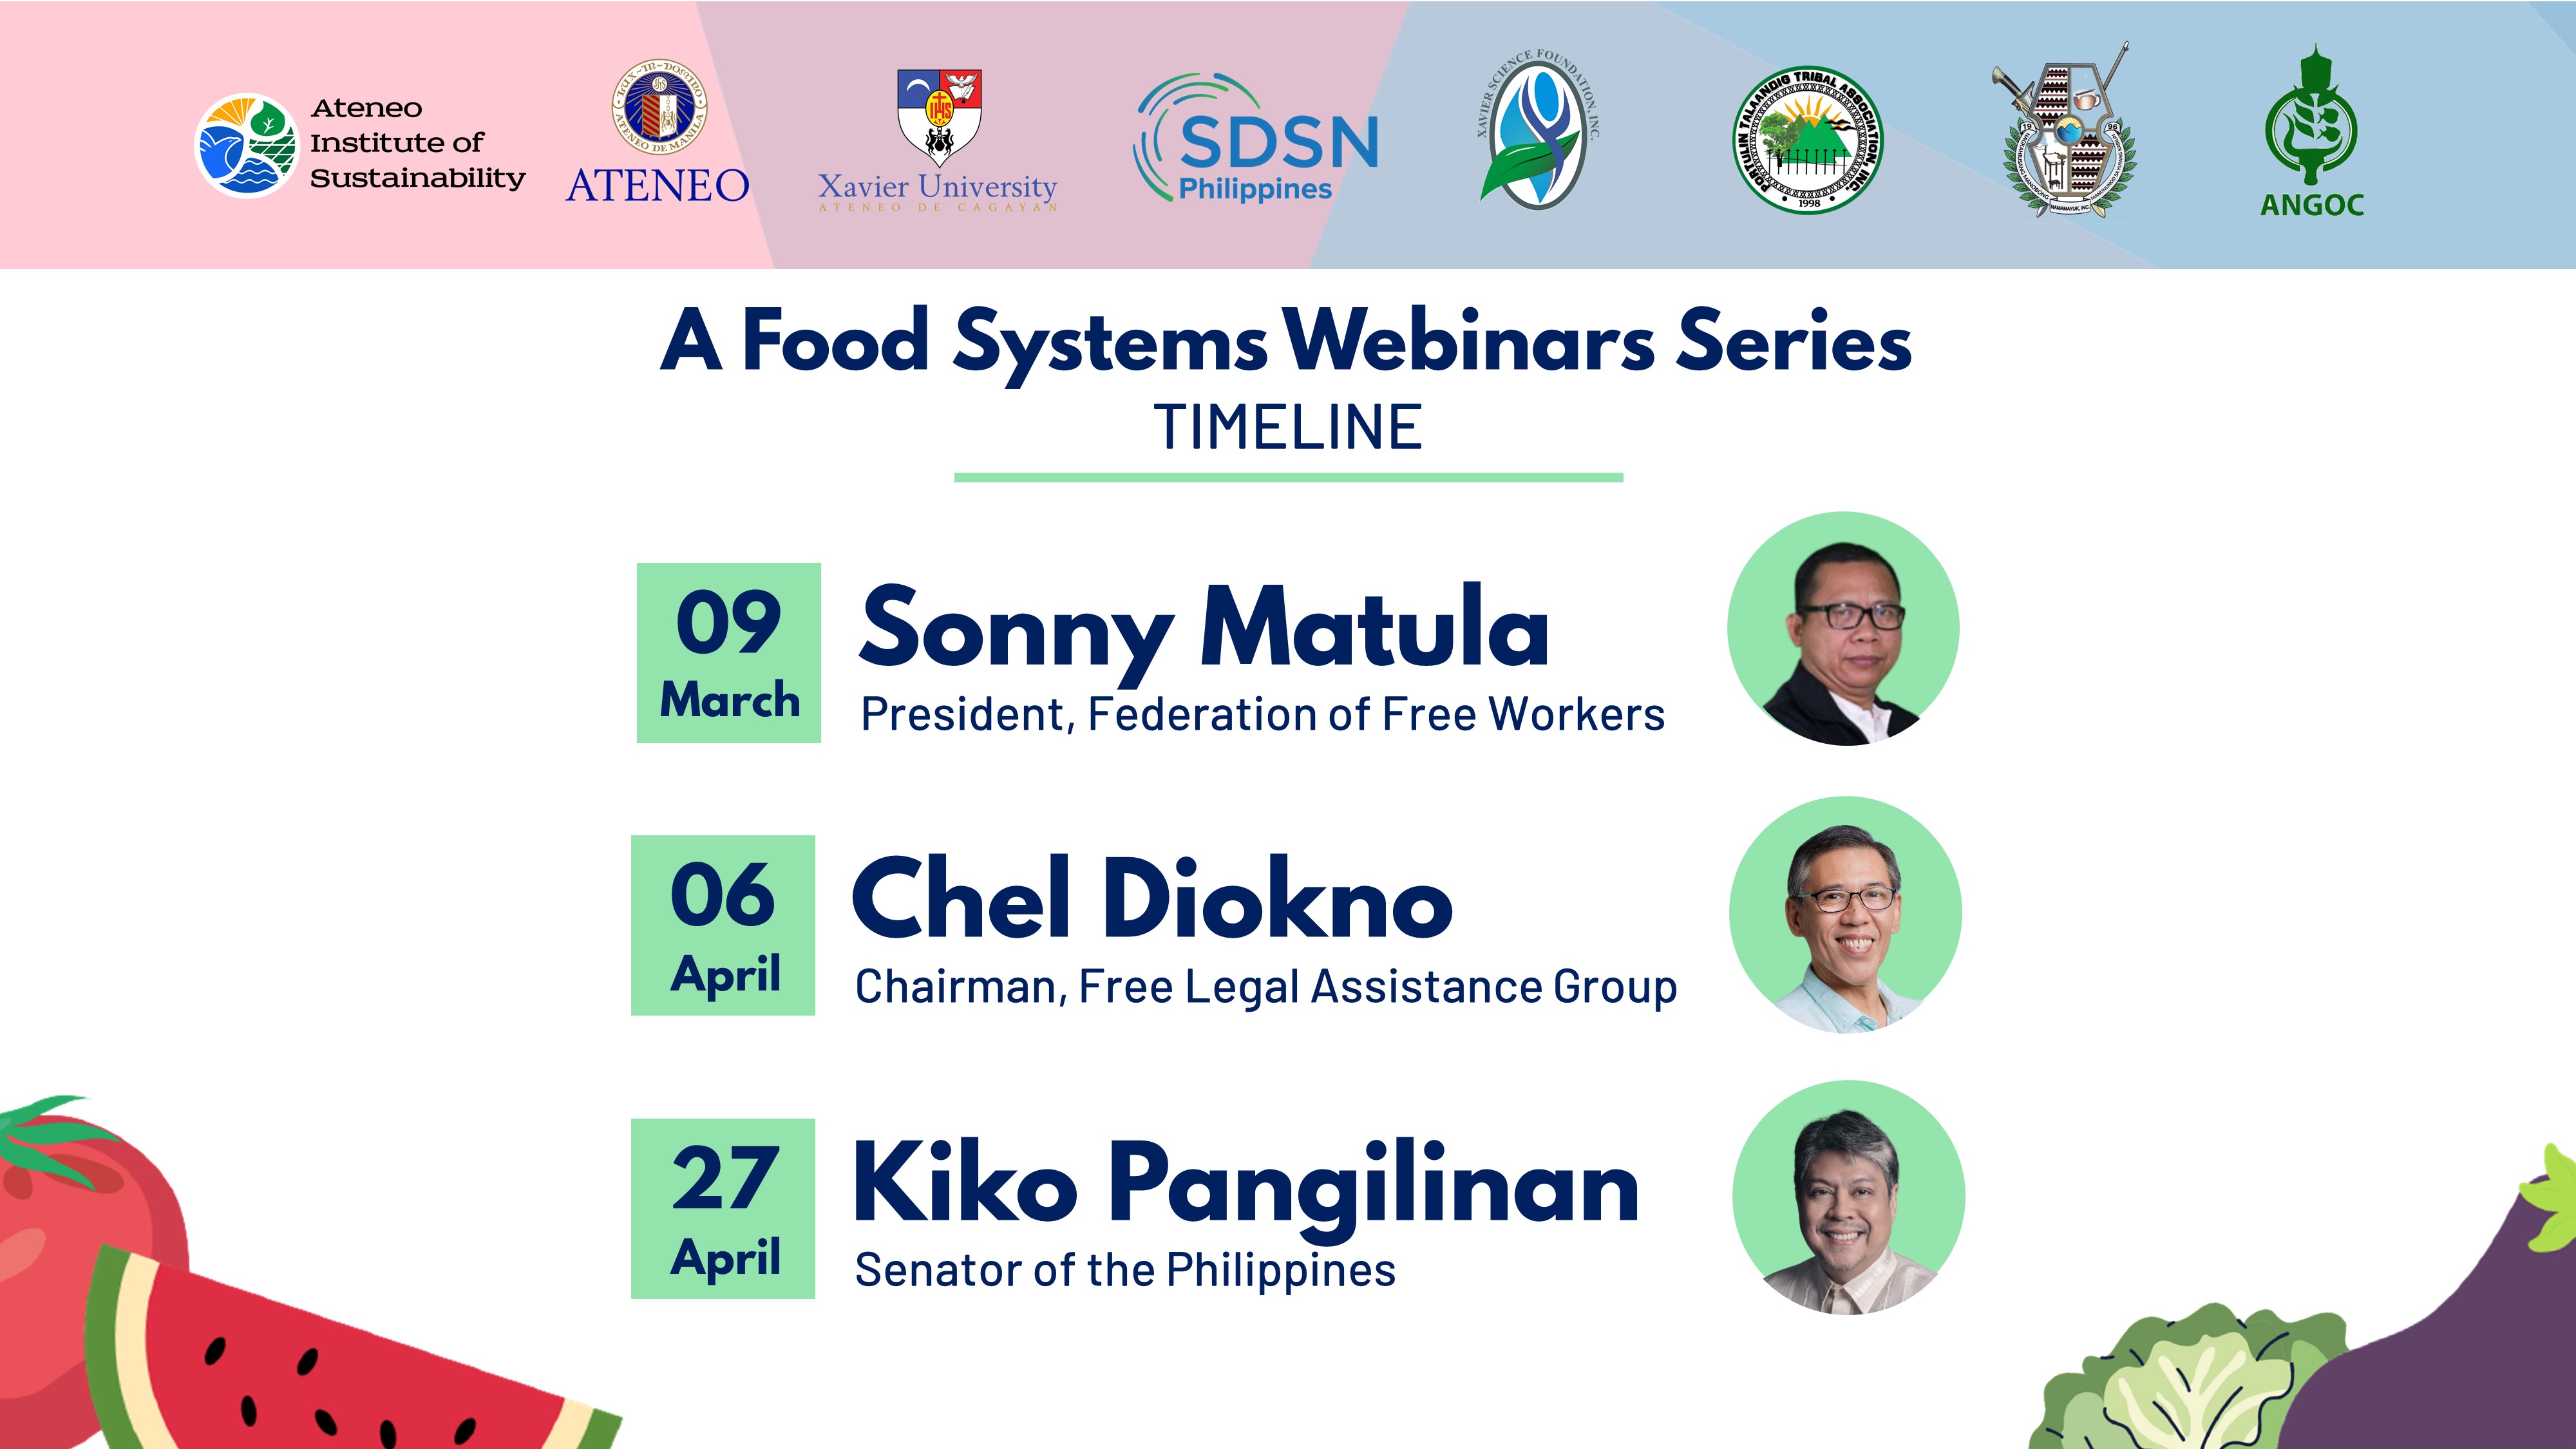 Food Systems Webinar Series Timeline: March 9 Sonny Matula, April 6 Chel Diokno, April 27 Kiko Pangilingan